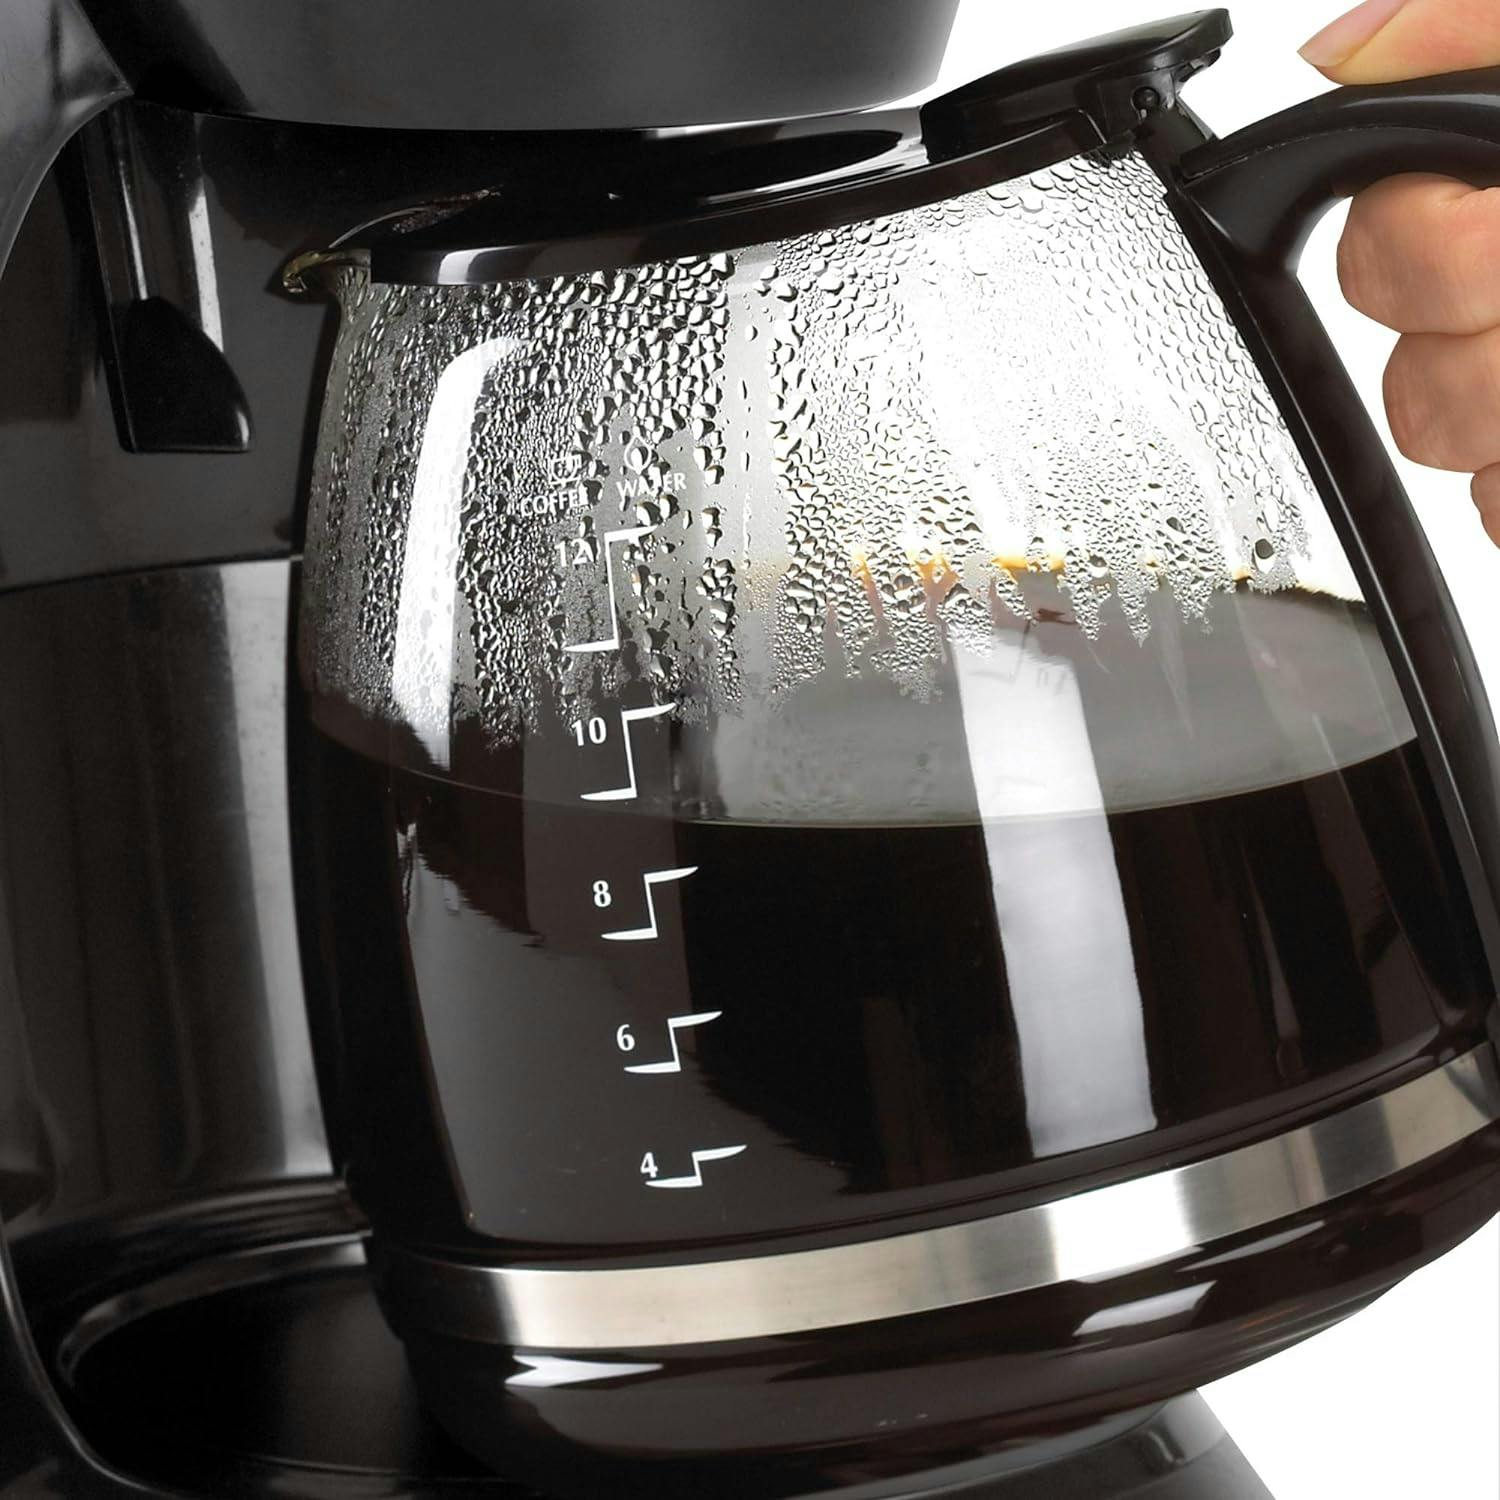 Sleek 12-Cup Black Programmable Coffee Maker with Auto Shutoff